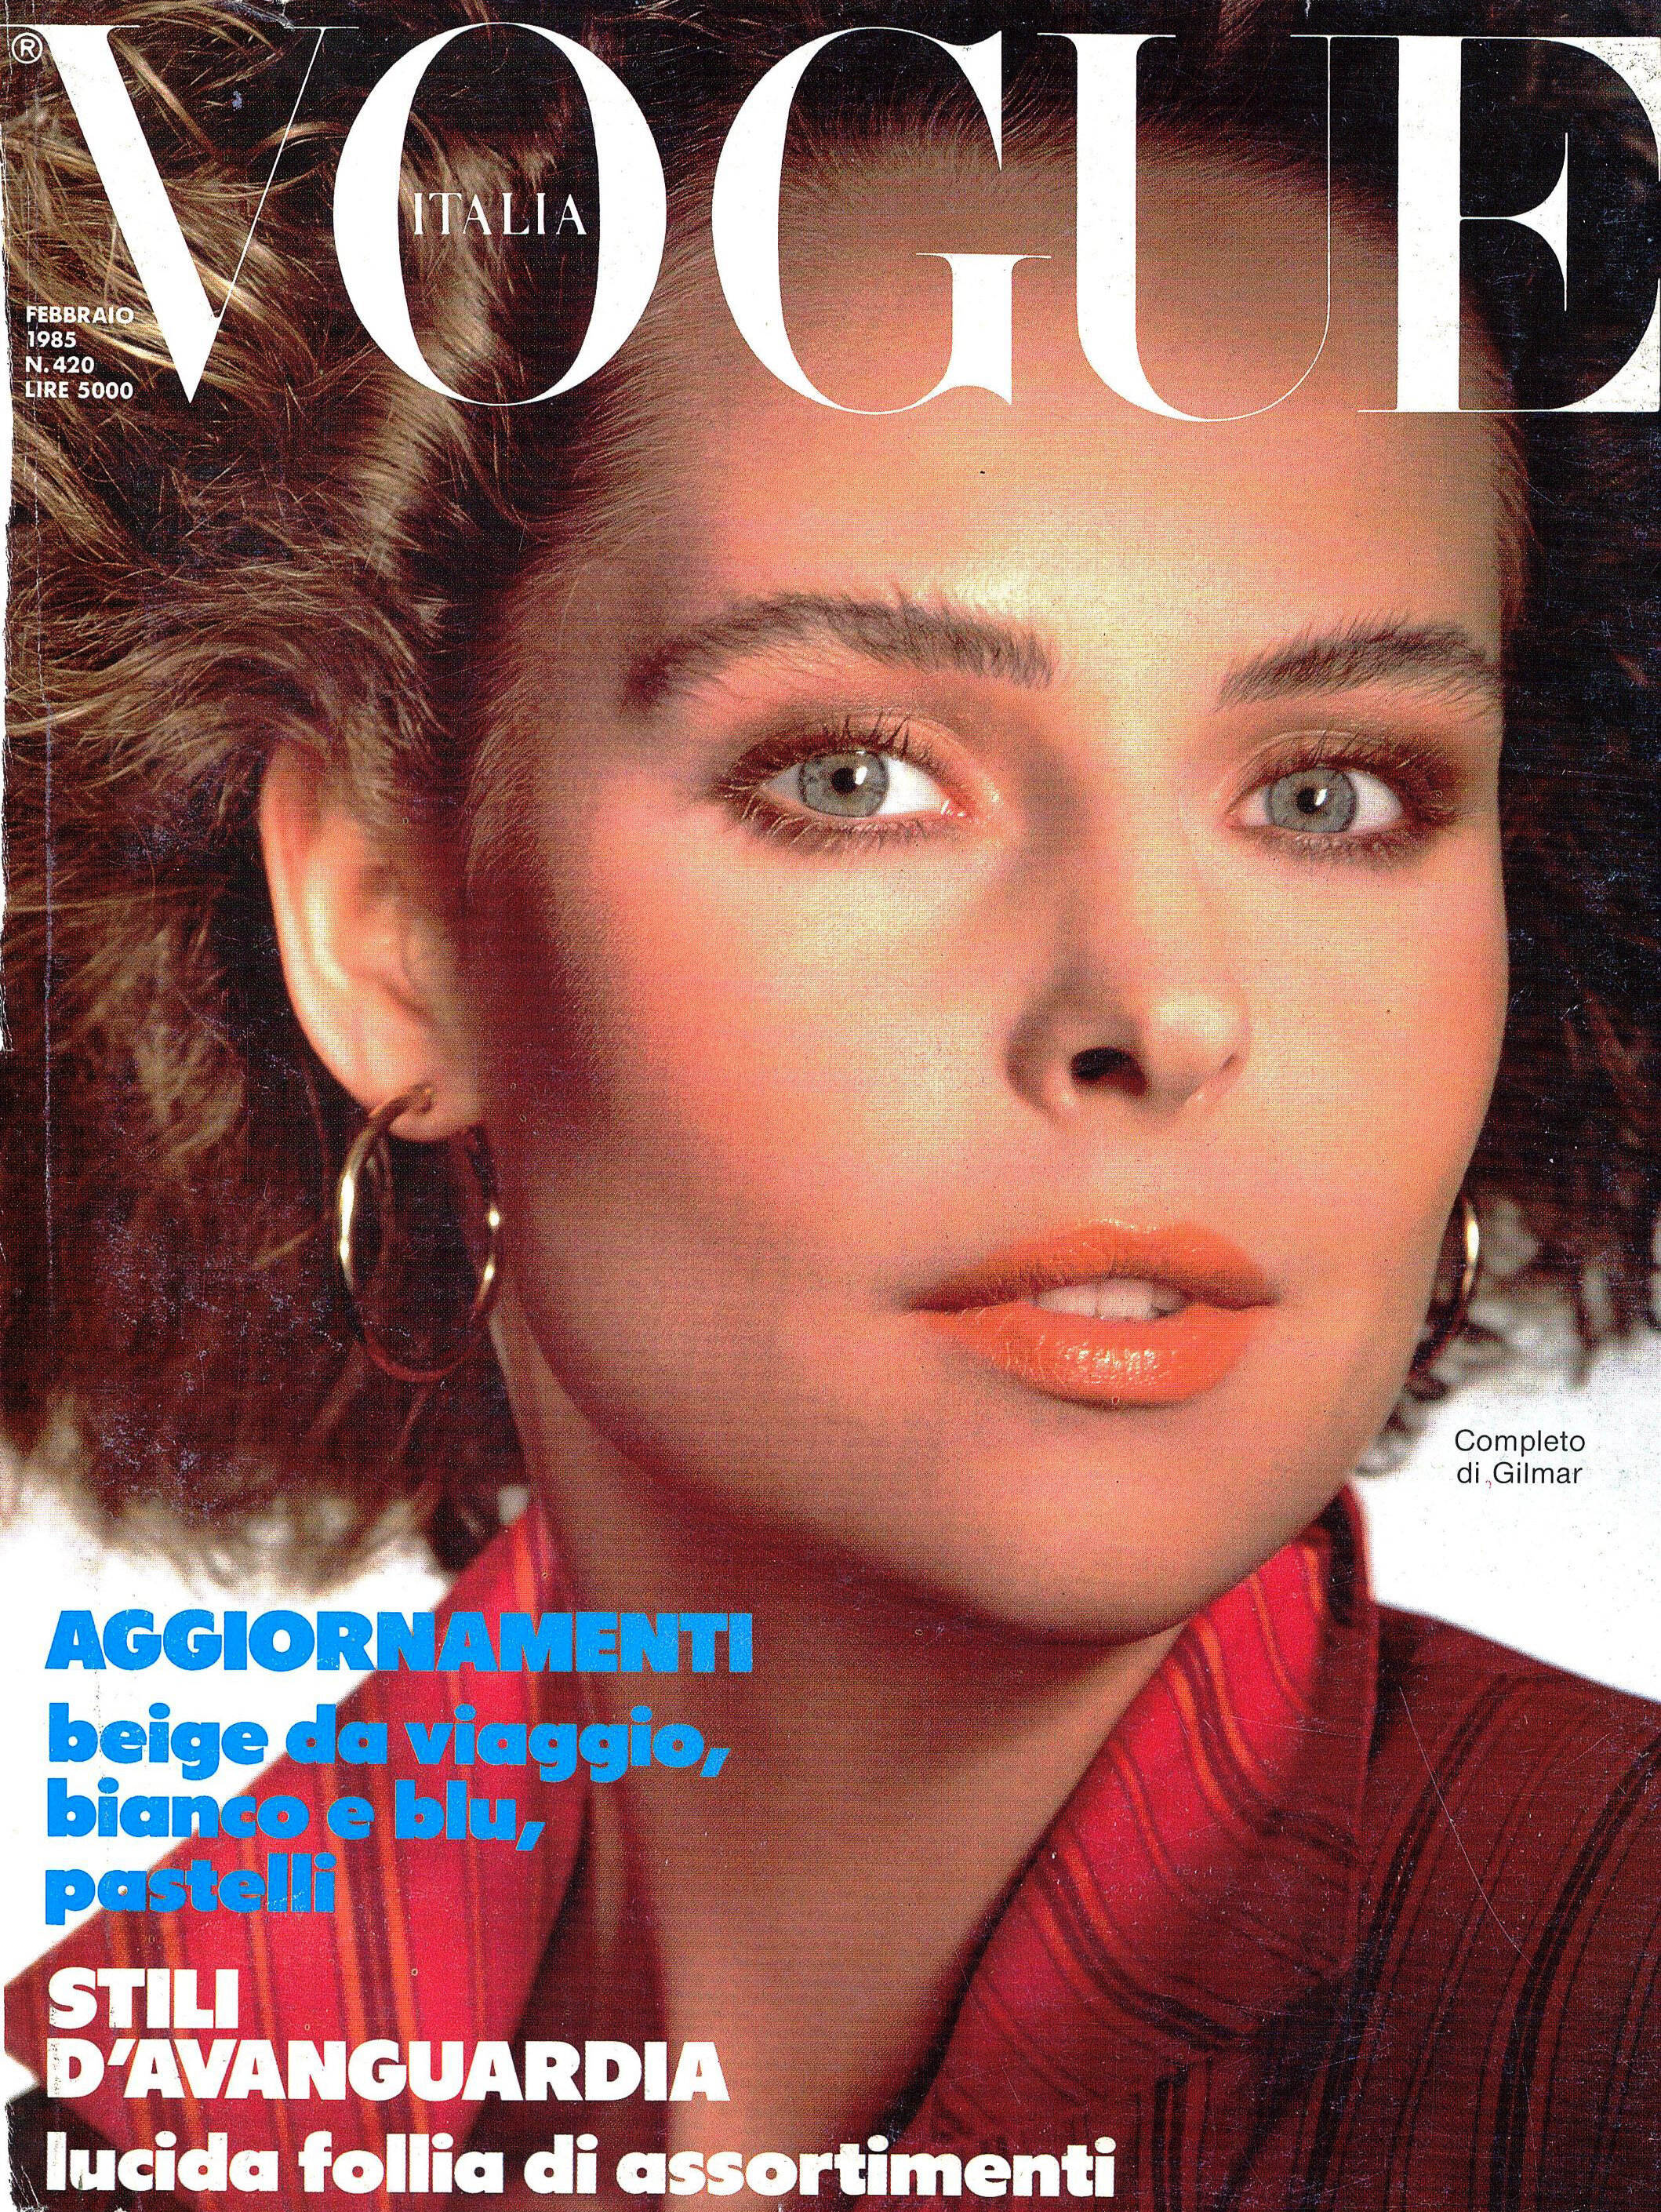 Vogue Italia (Feb 1985)_hiro_gillette.jpg